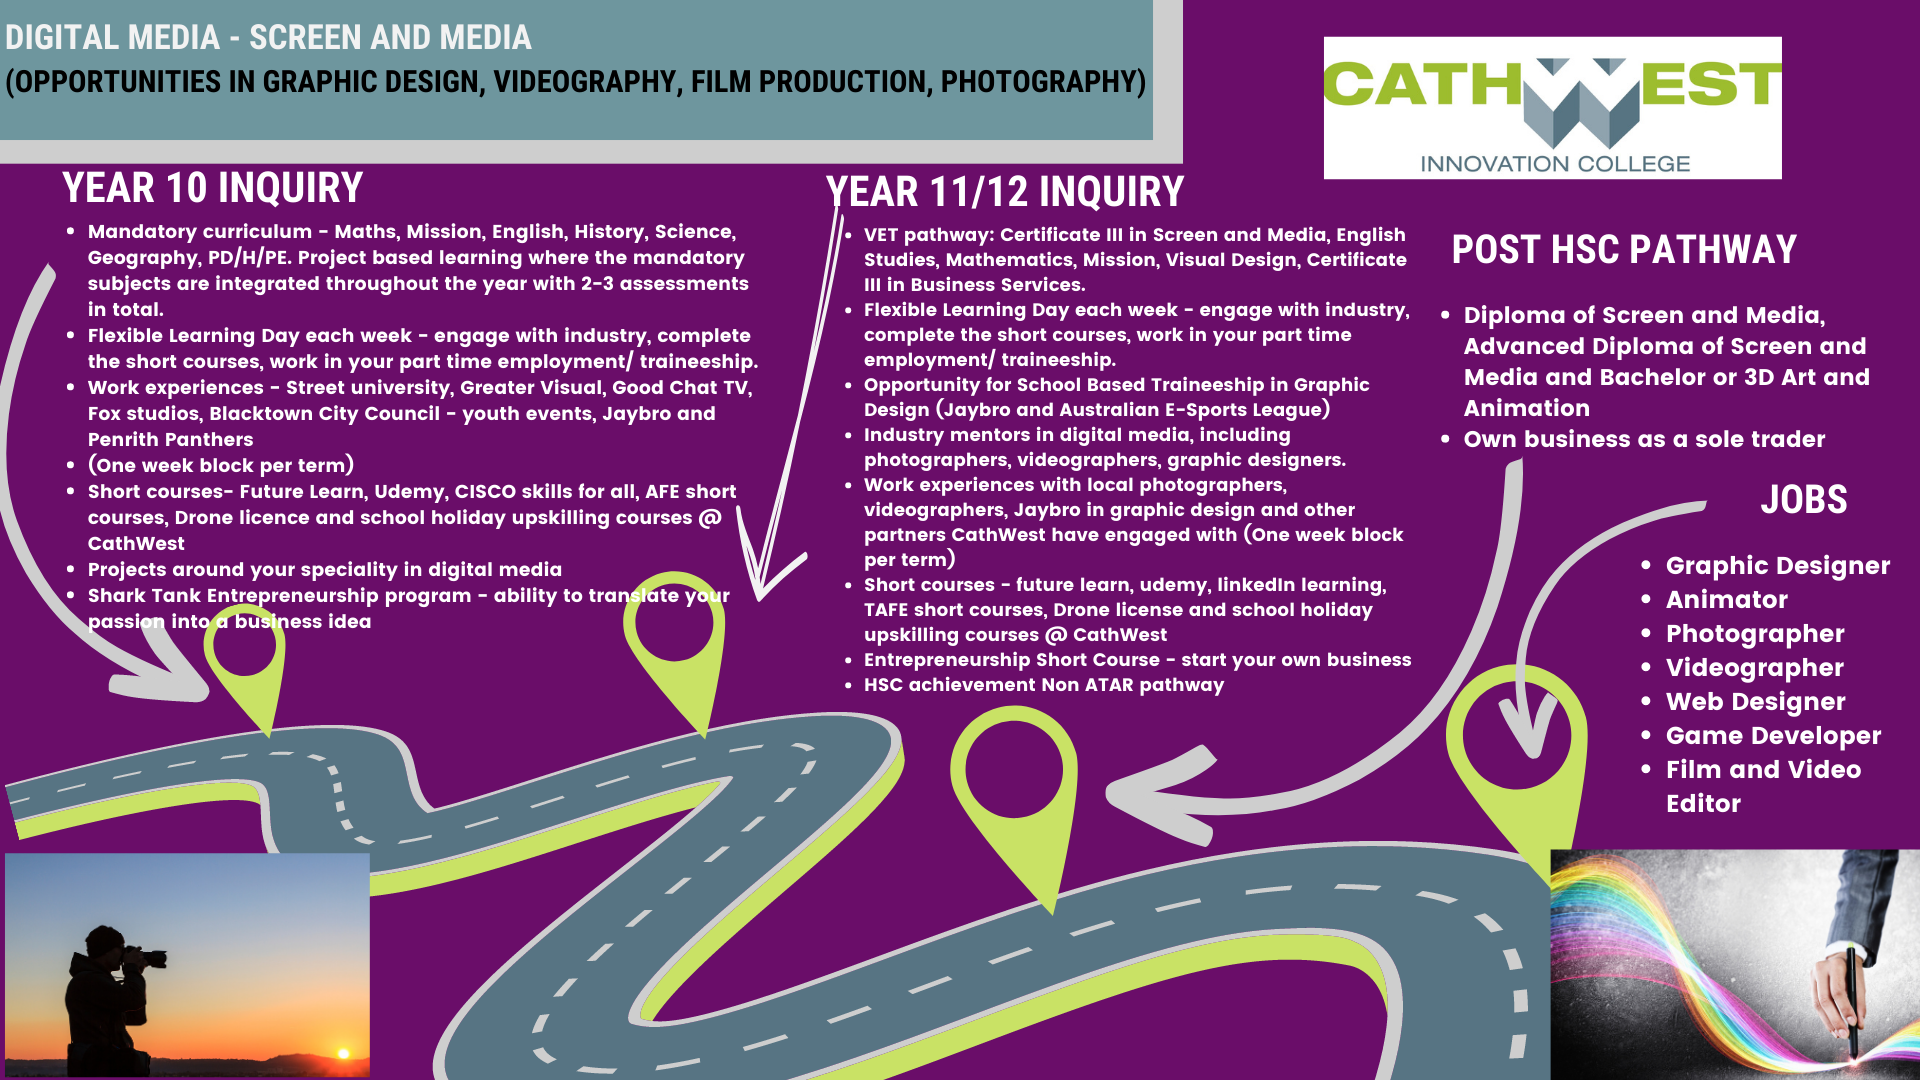 Digital Media Career Pathways at CathWest Innovation College